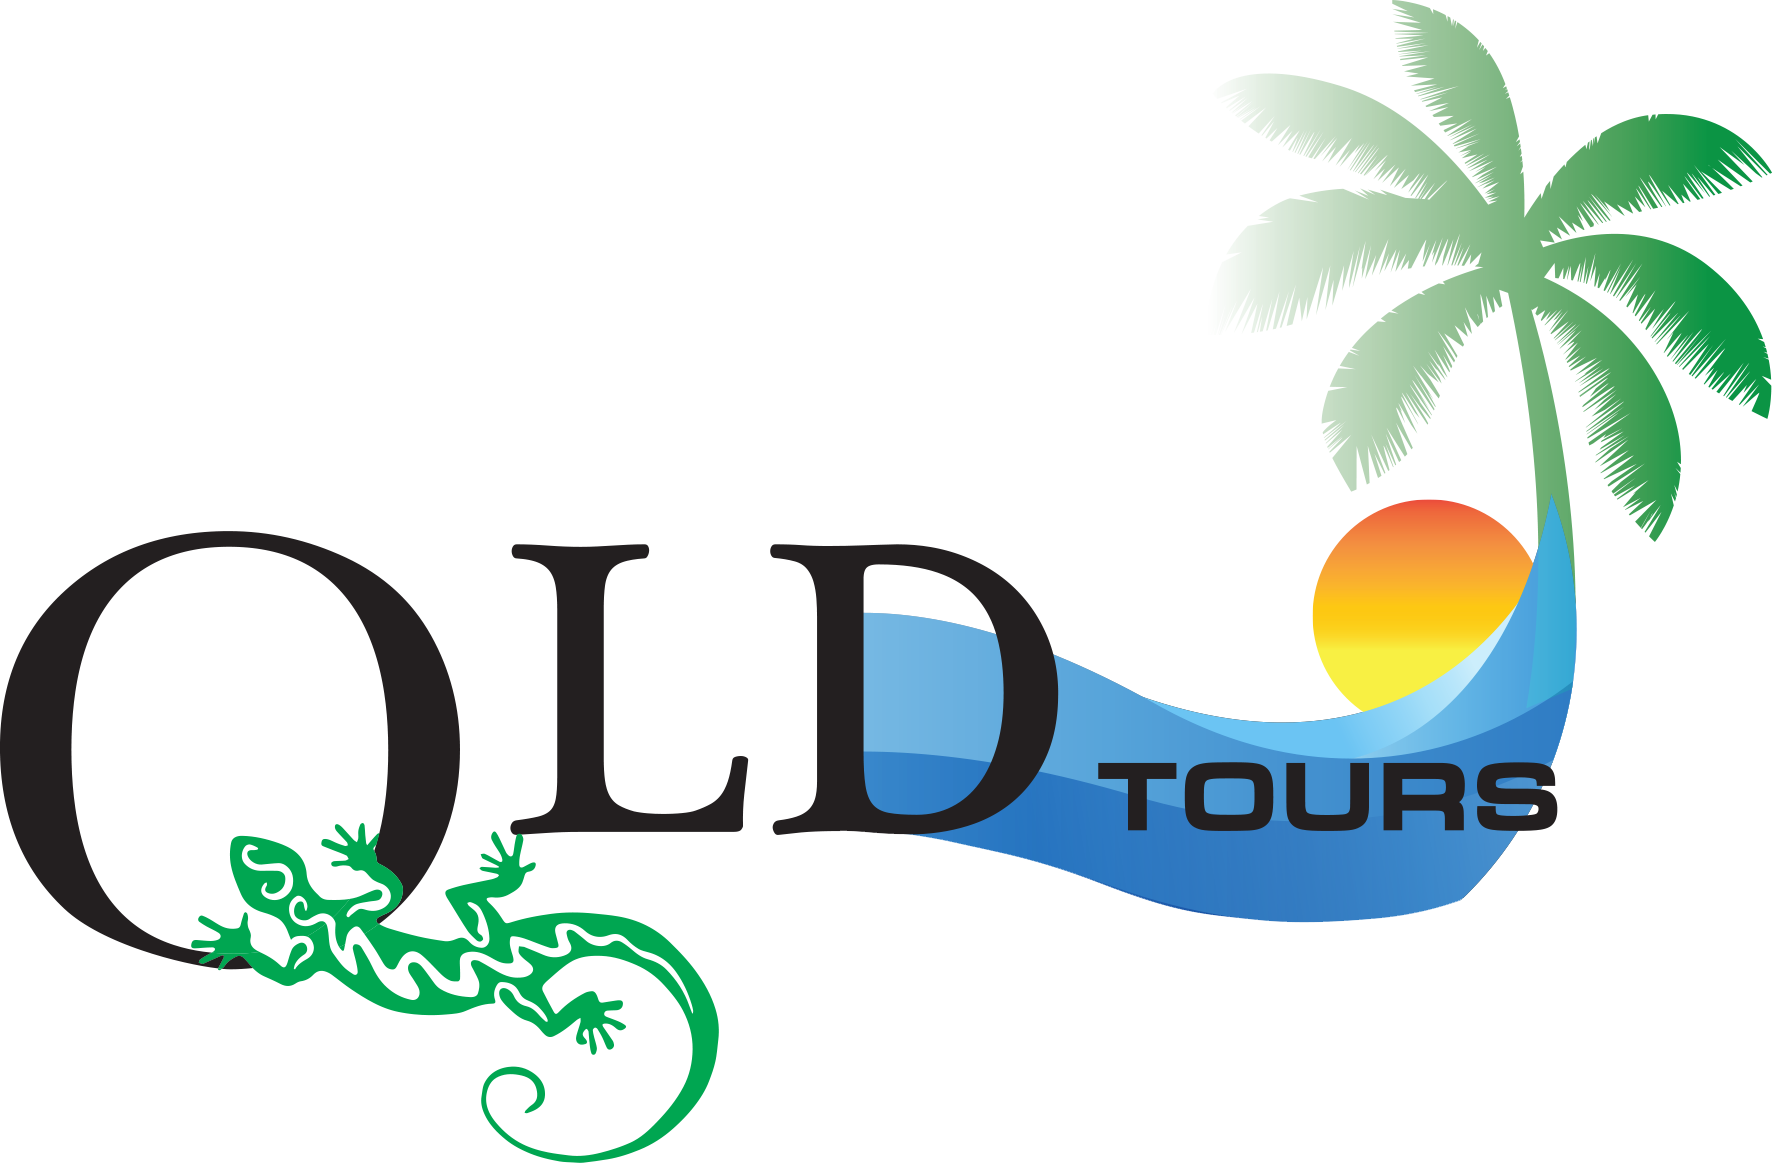 QLD Tours